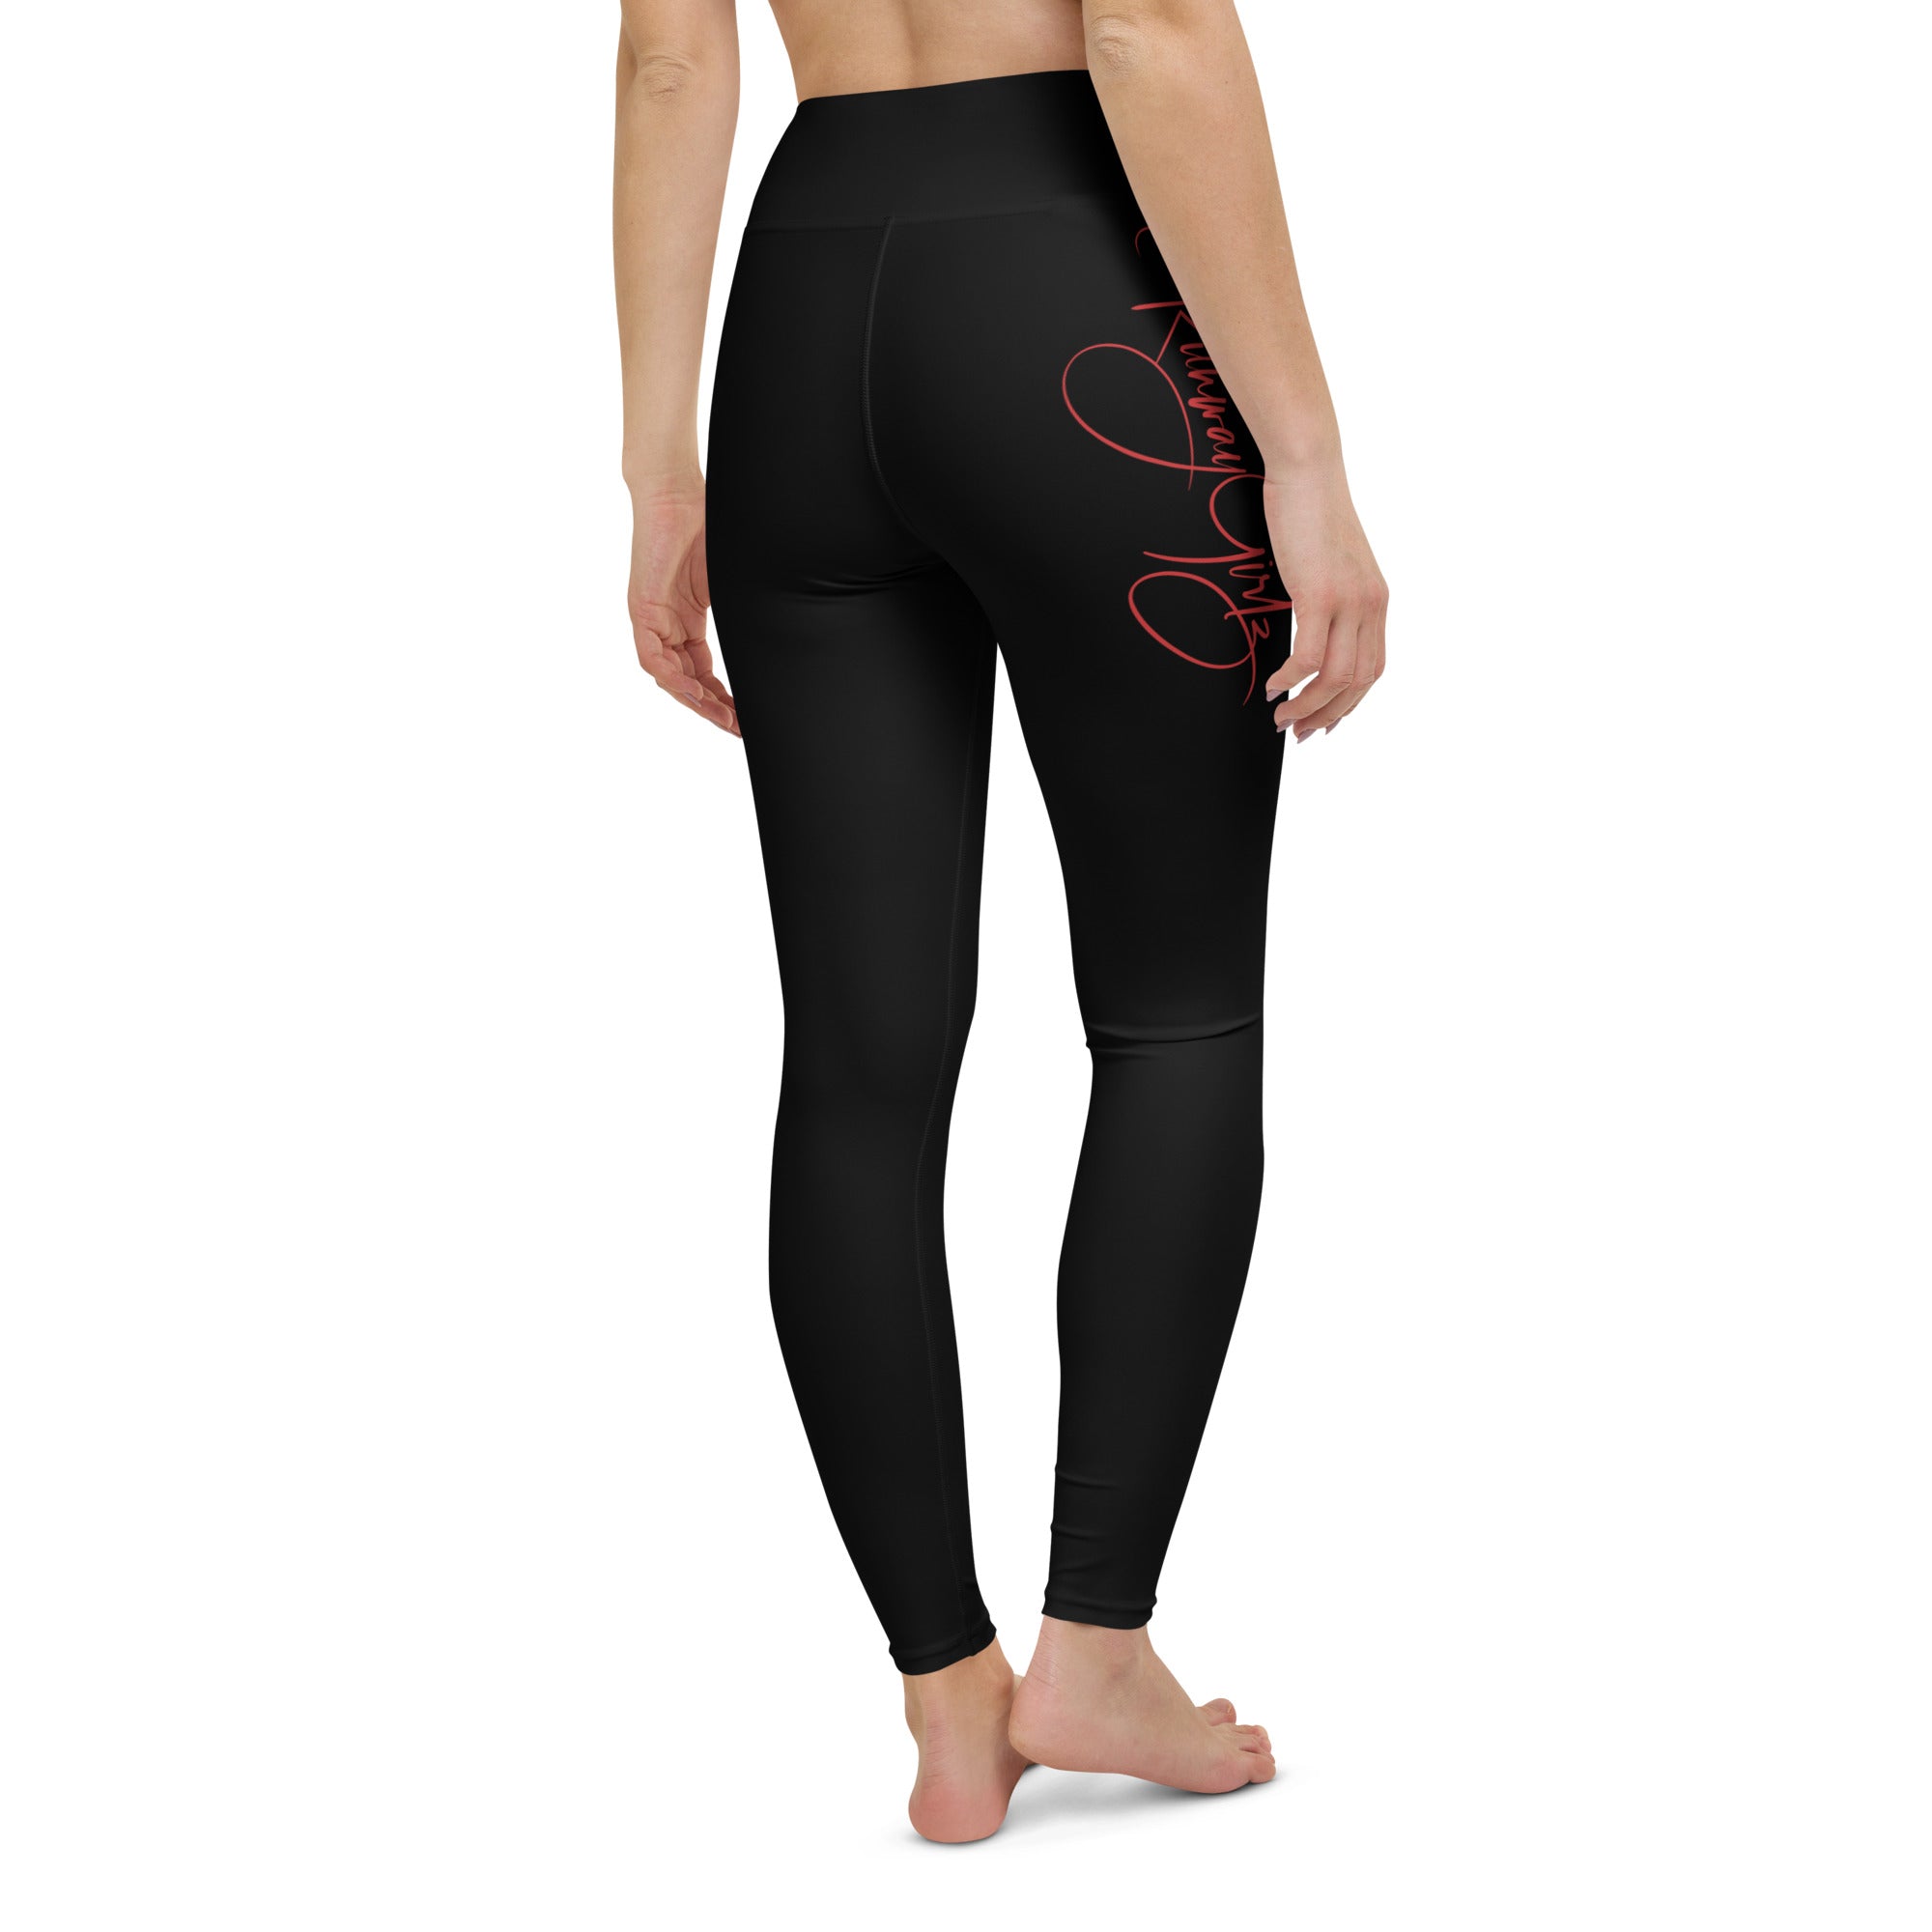 Women's Runway Girlz Yoga Leggings (Black/Red) – The Runway Boyz